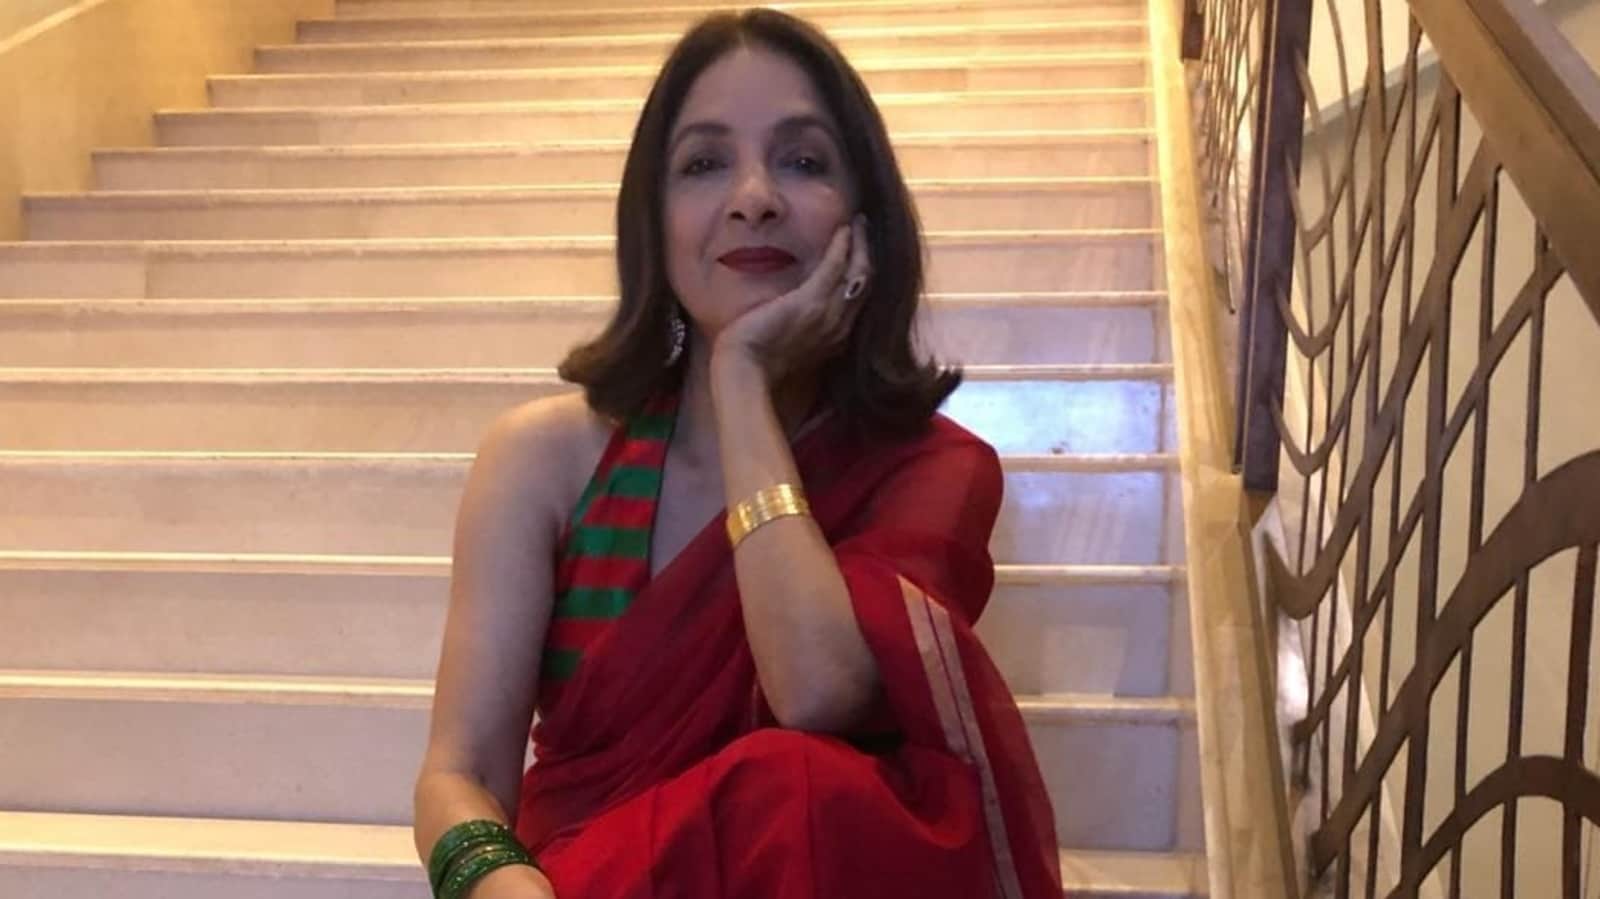 Neena Gupta in talks with filmmakers for her biopic